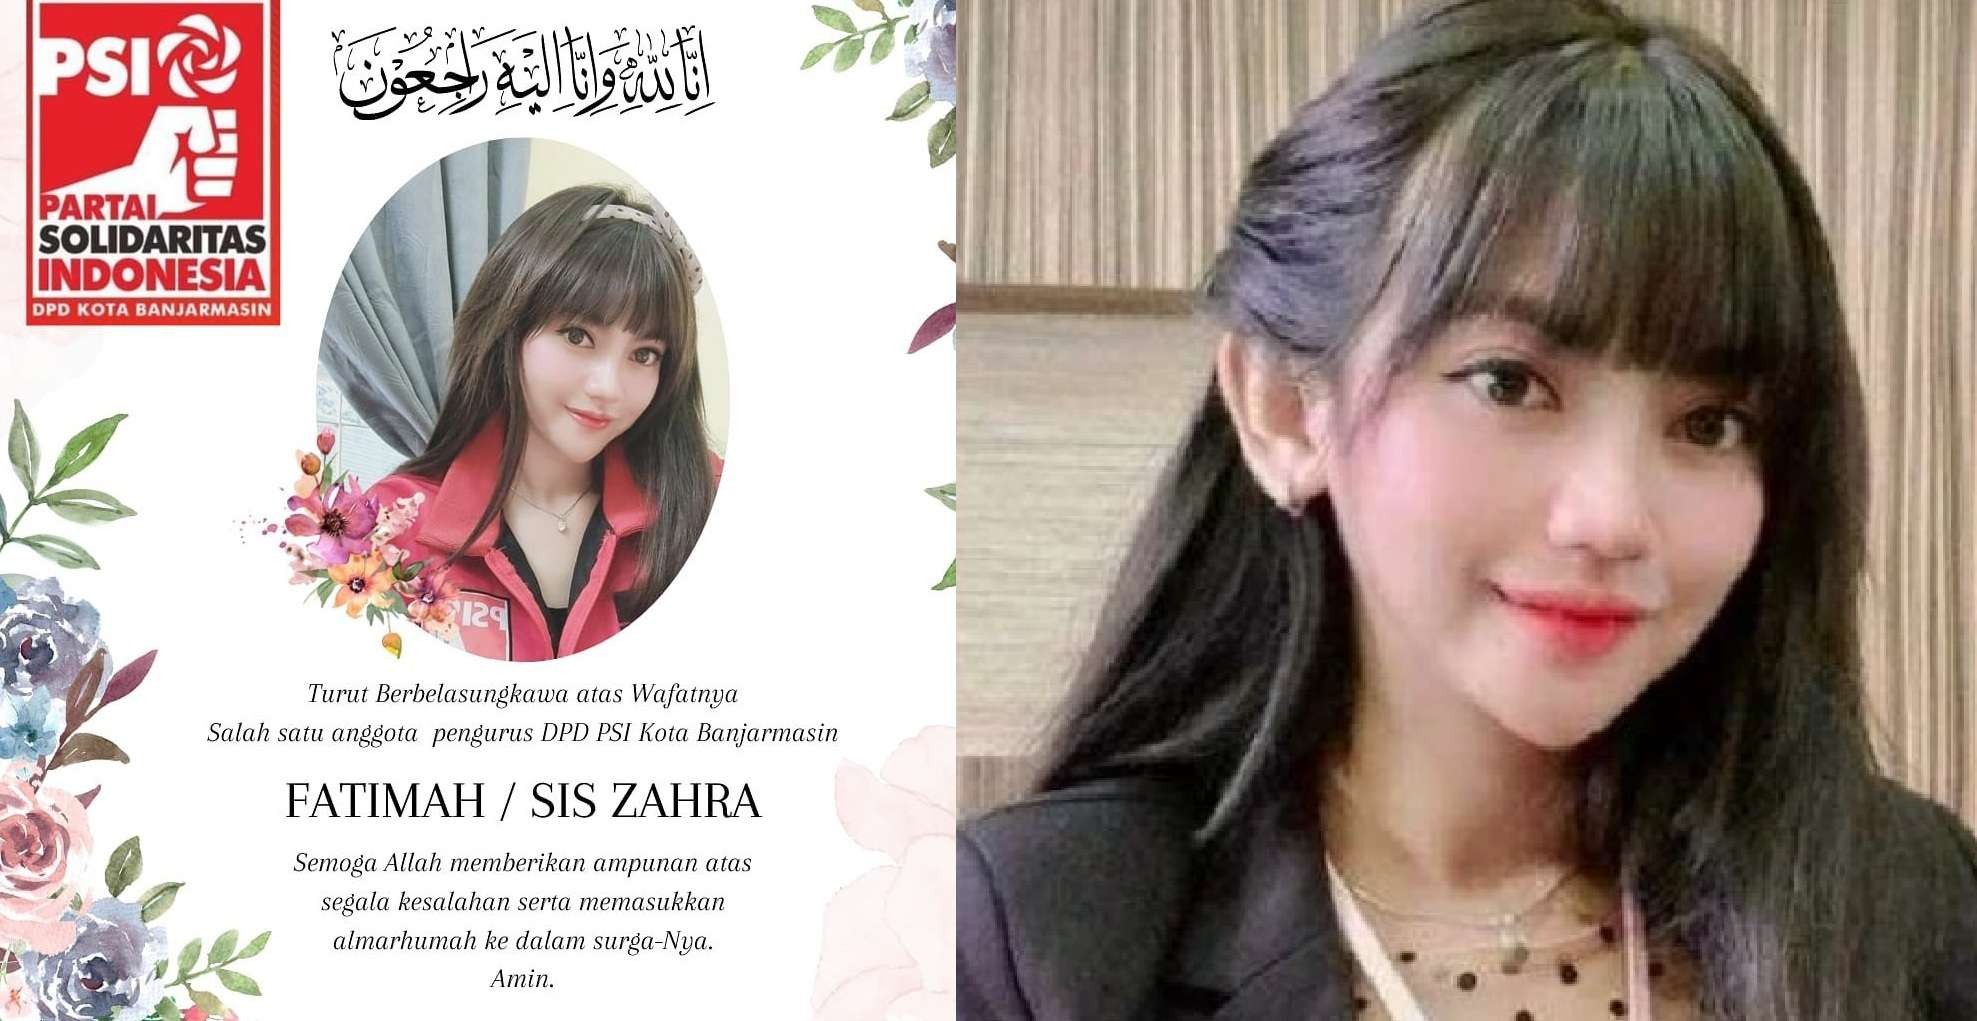 Kader PSI, Fatimah alias Sis Zahra, tewas dalam kecelakaan maut bersama AKP Novandi Arya, putra pertama Gubernur Kaltara, Zainal Arifin Paliwang. (Foto: Kolase/Instagram)